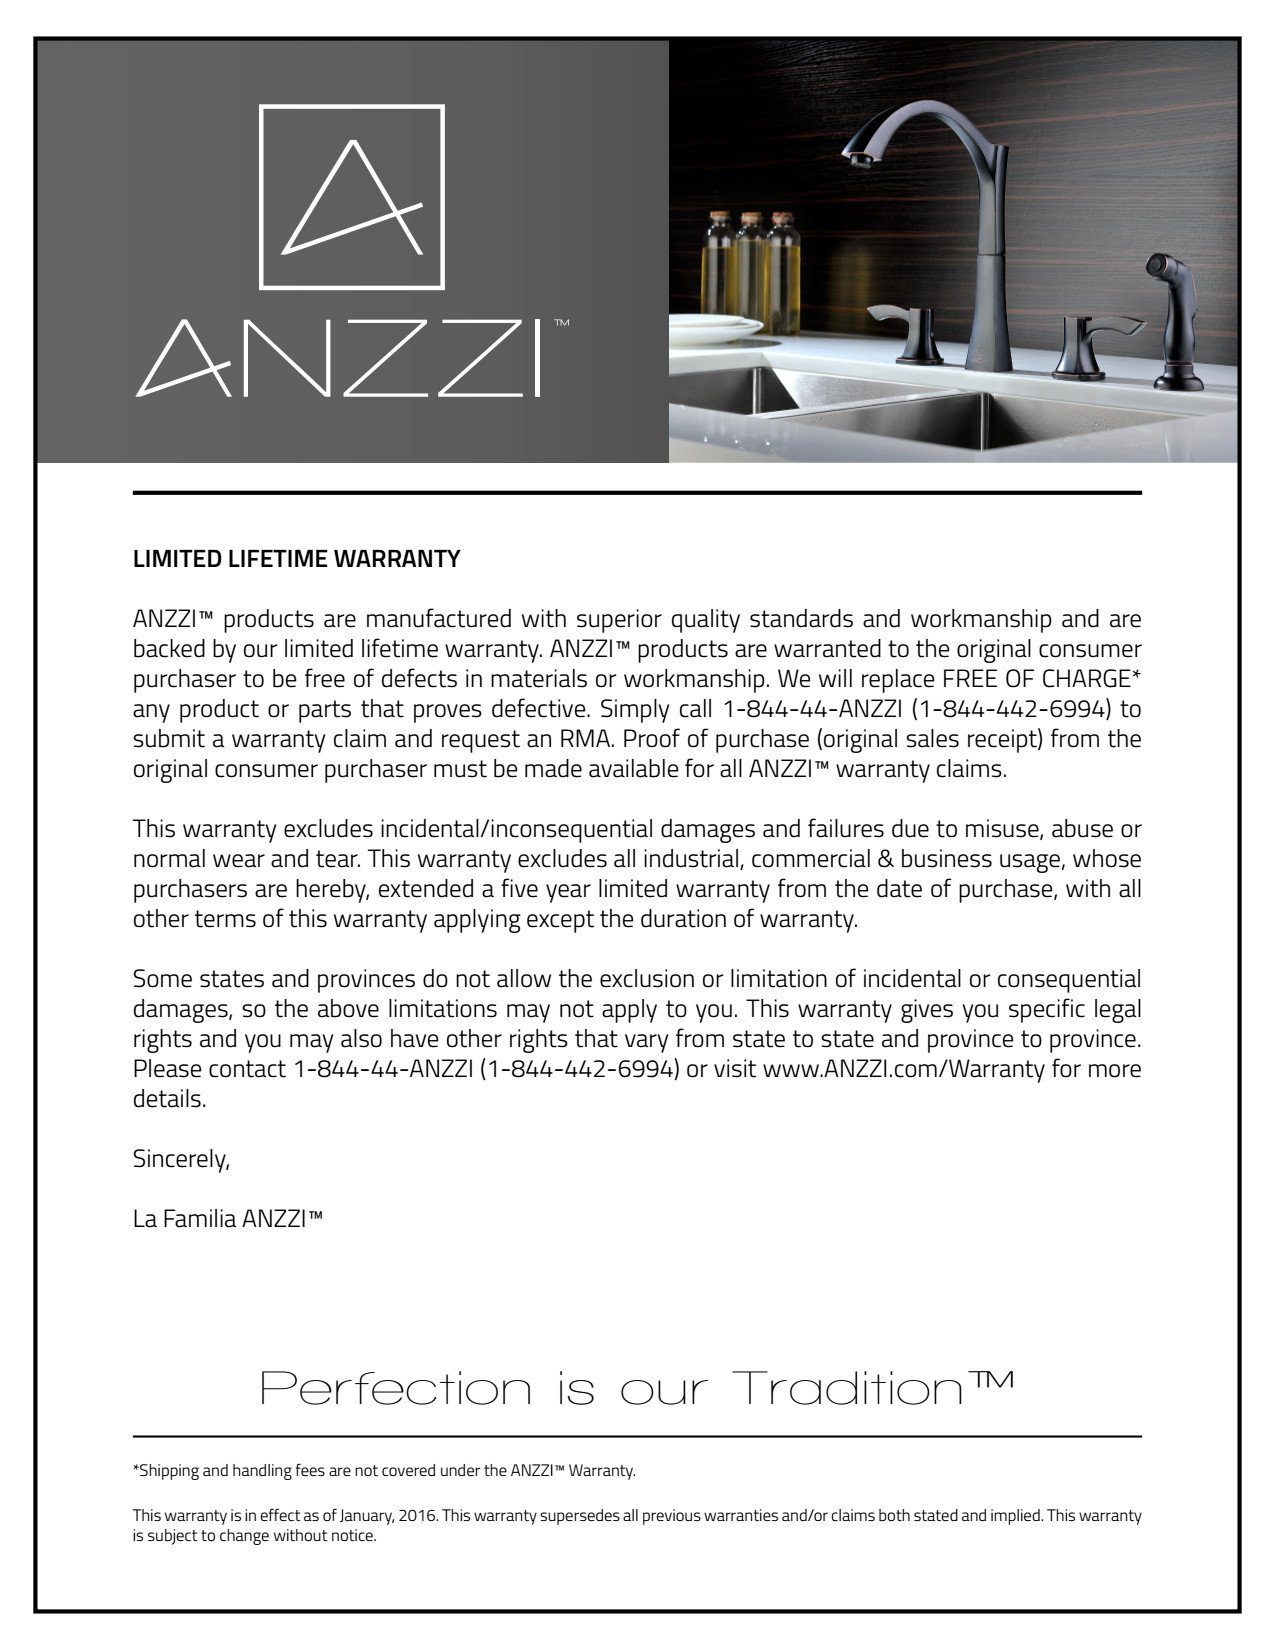 ANZZI Arc Series LS-AZ216 Vessel Sink - Glass Bathroom Sink ANZZI 